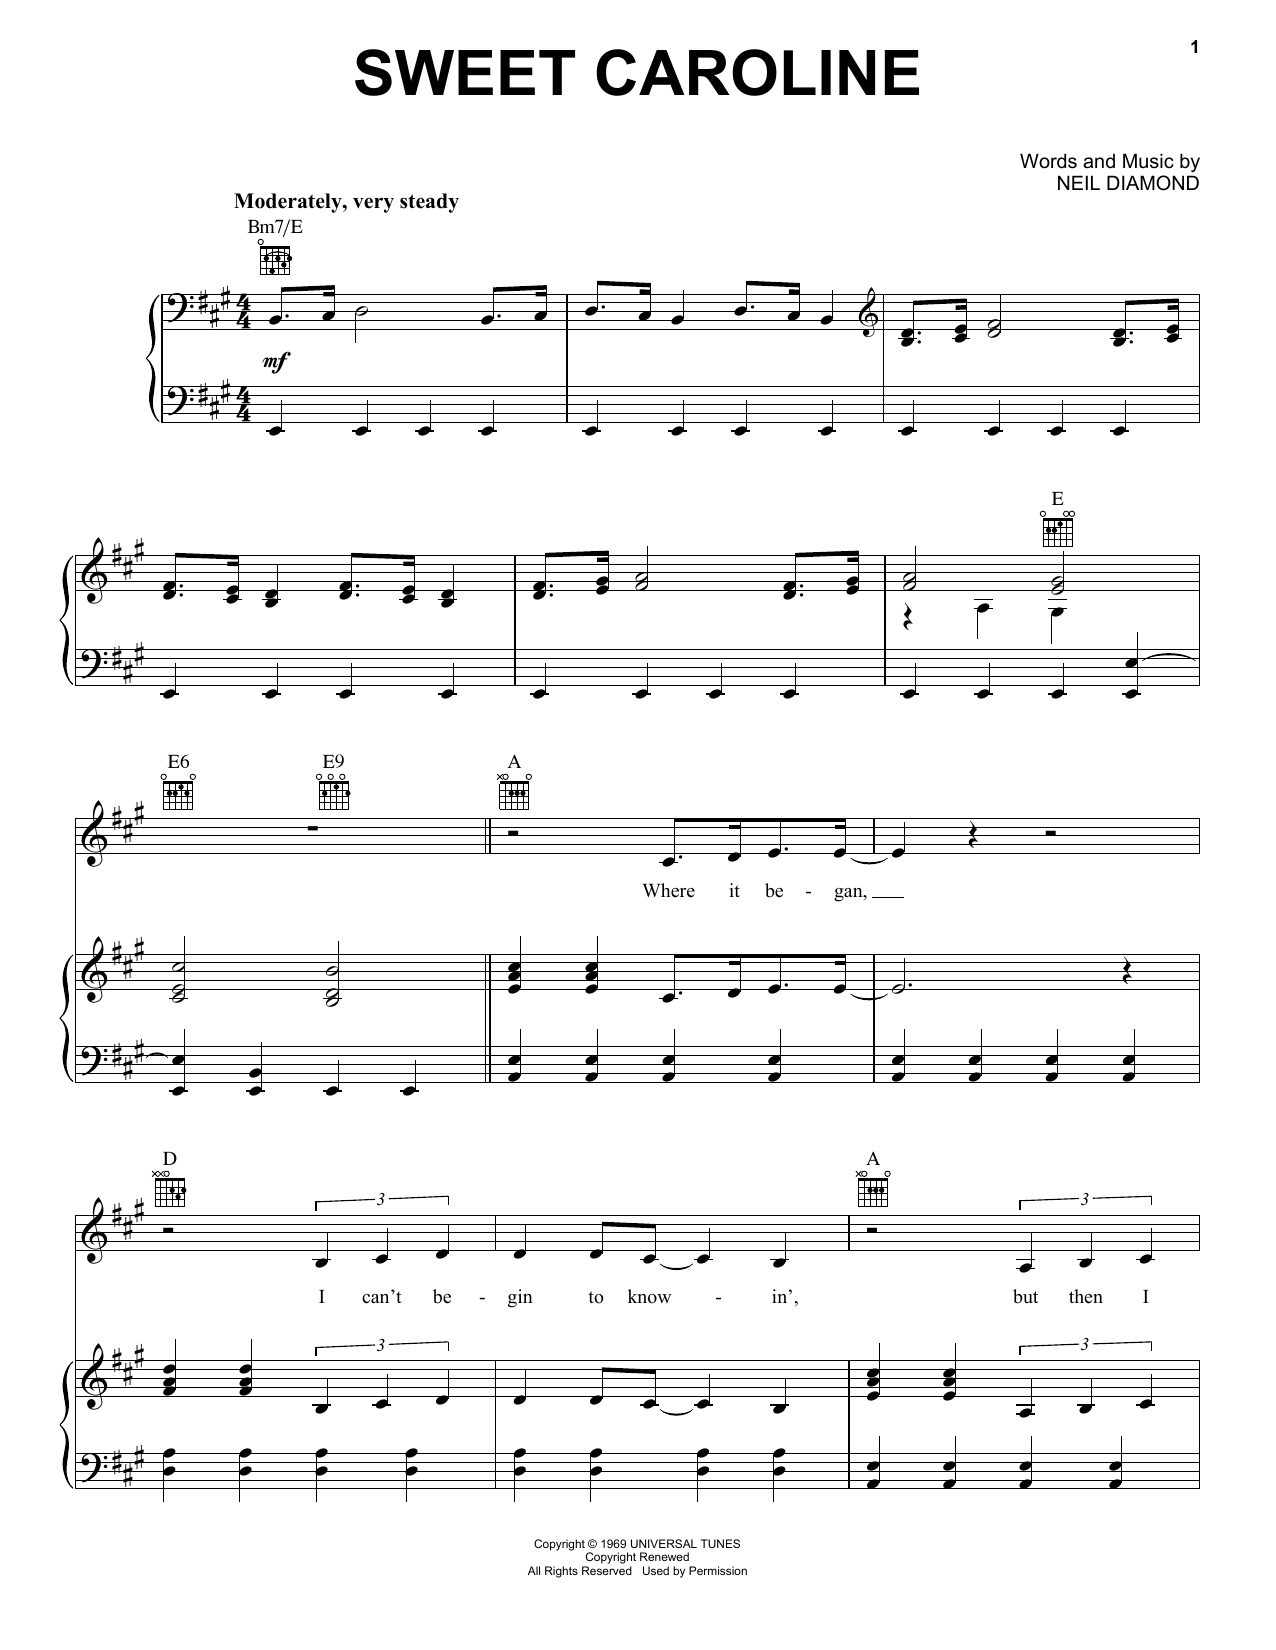 Neil Diamond Sweet Caroline Sheet Music Notes & Chords for Easy Guitar Tab - Download or Print PDF